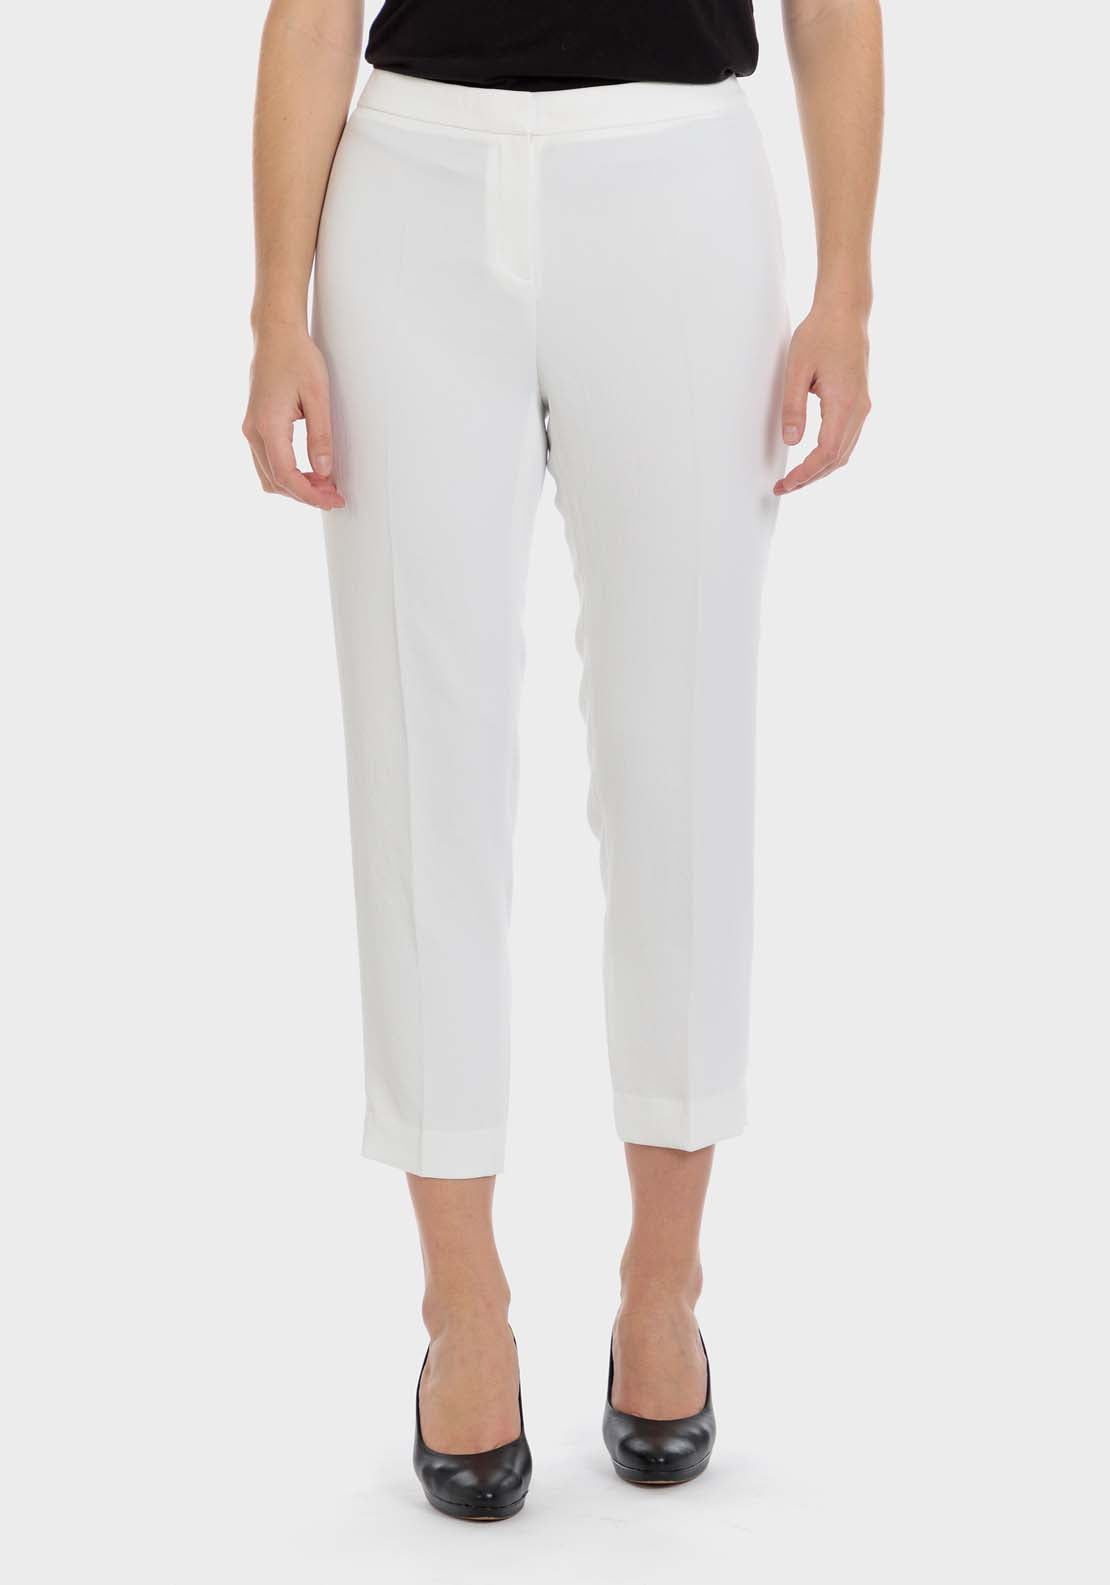 Punt Roma Capri Trousers - White 2 Shaws Department Stores